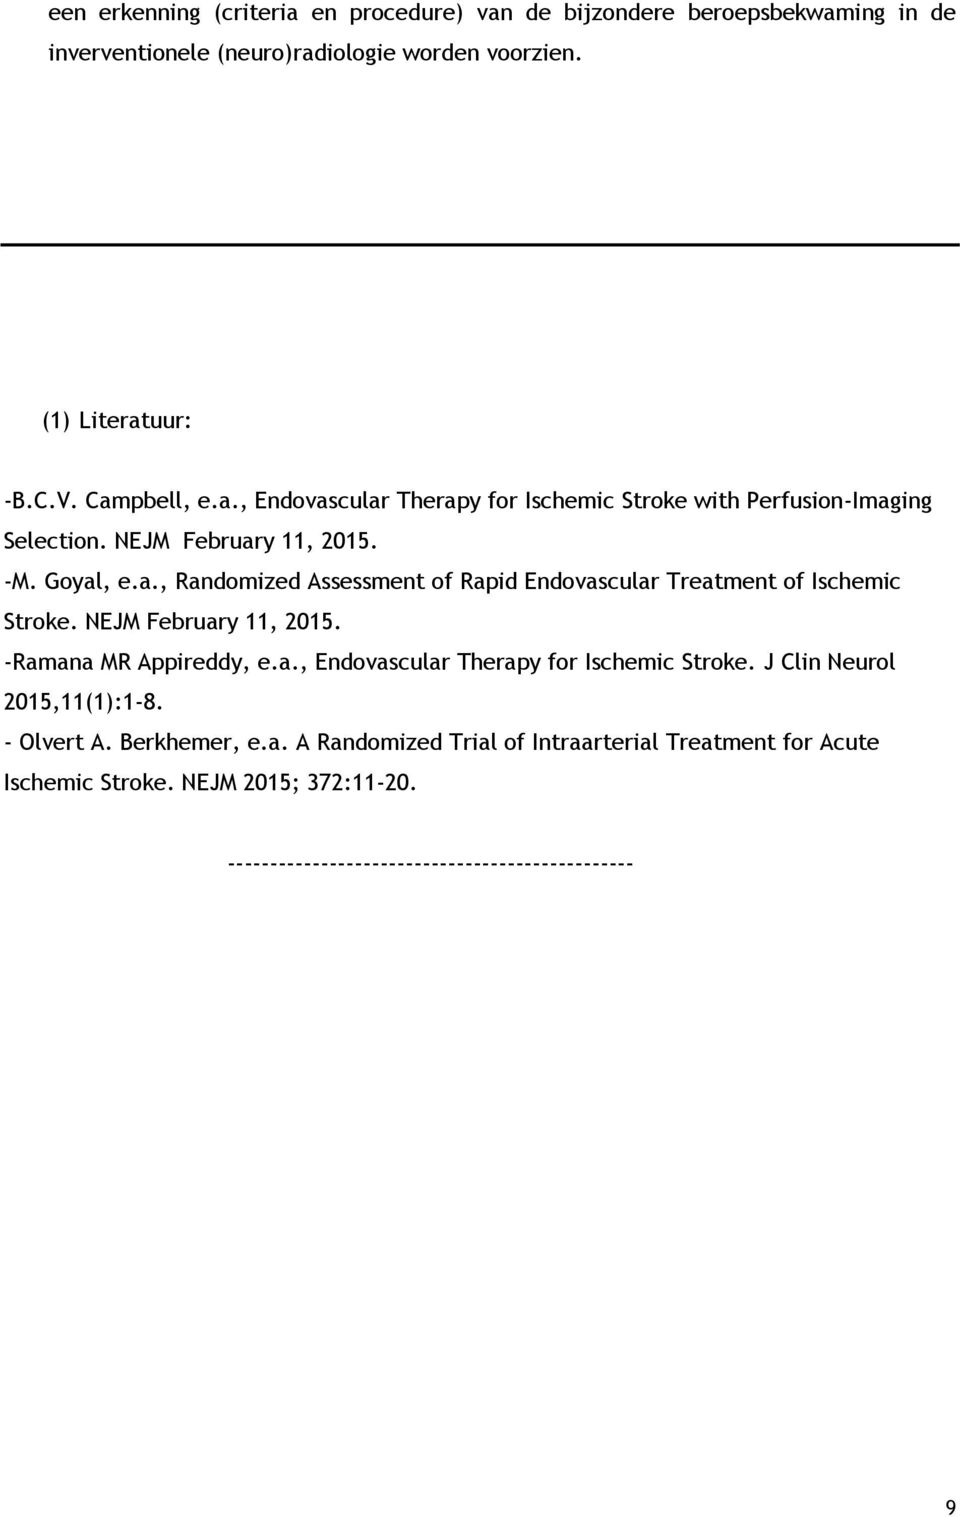 NEJM February 11, 2015. -Ramana MR Appireddy, e.a., Endovascular Therapy for Ischemic Stroke. J Clin Neurol 2015,11(1):1-8. - Olvert A. Berkhemer, e.a. A Randomized Trial of Intraarterial Treatment for Acute Ischemic Stroke.